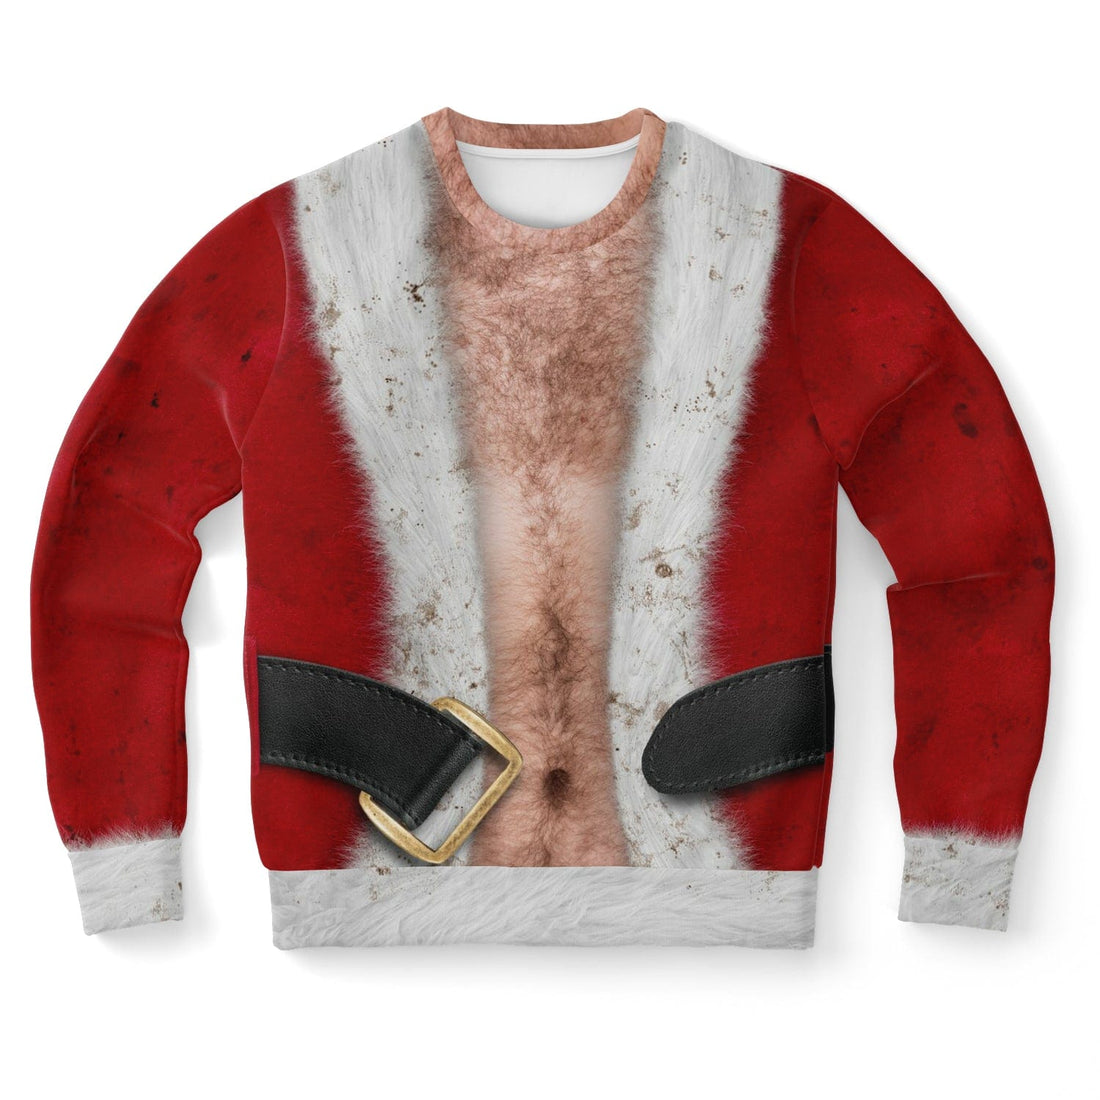 Kate McEnroe New York Bad Santa Ugly Christmas SweatersSweatshirtSBSWF_D - 8U8YL - XS